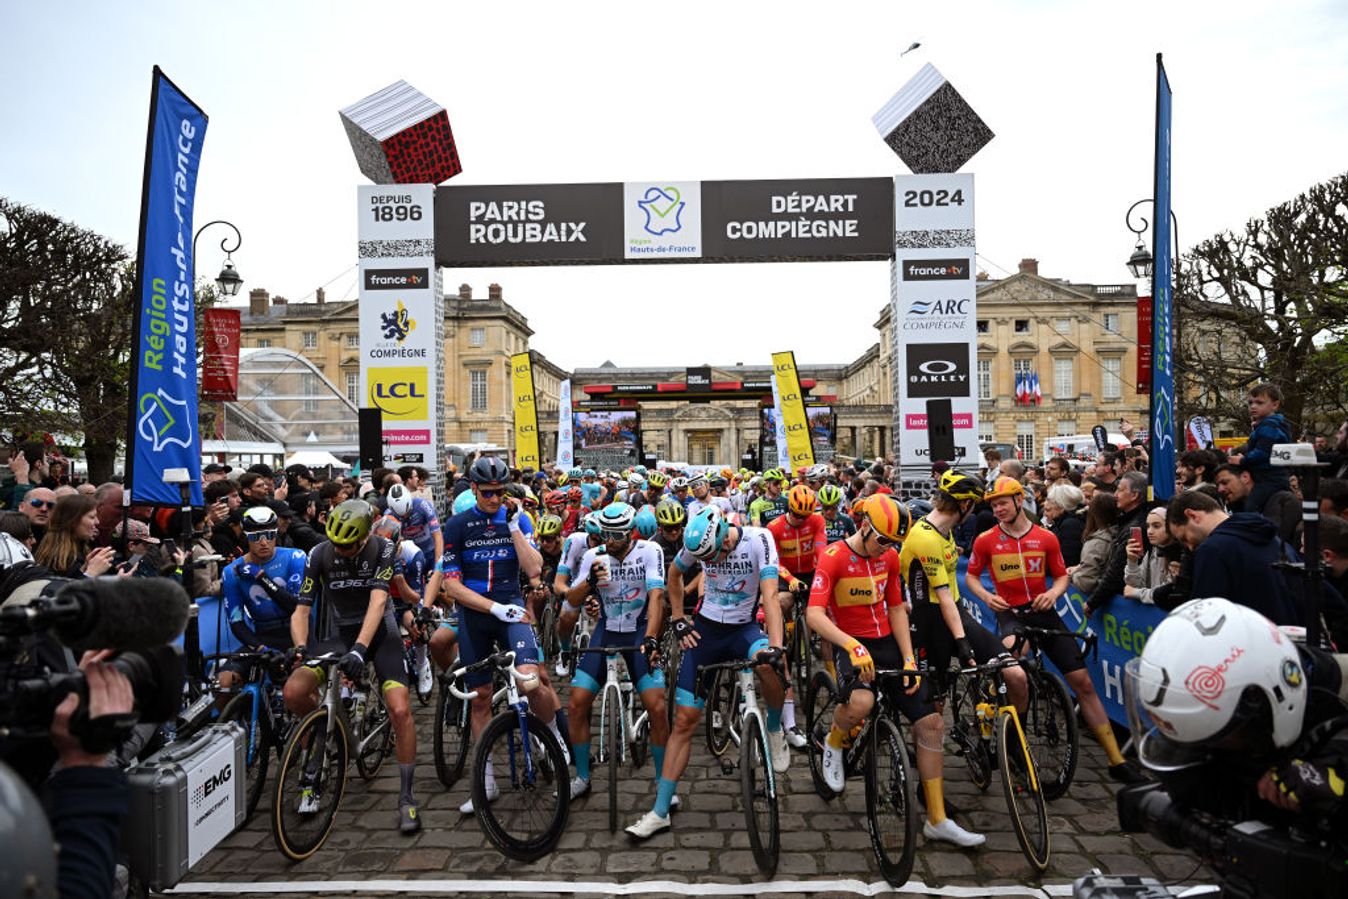 The start line of Paris-Roubaix